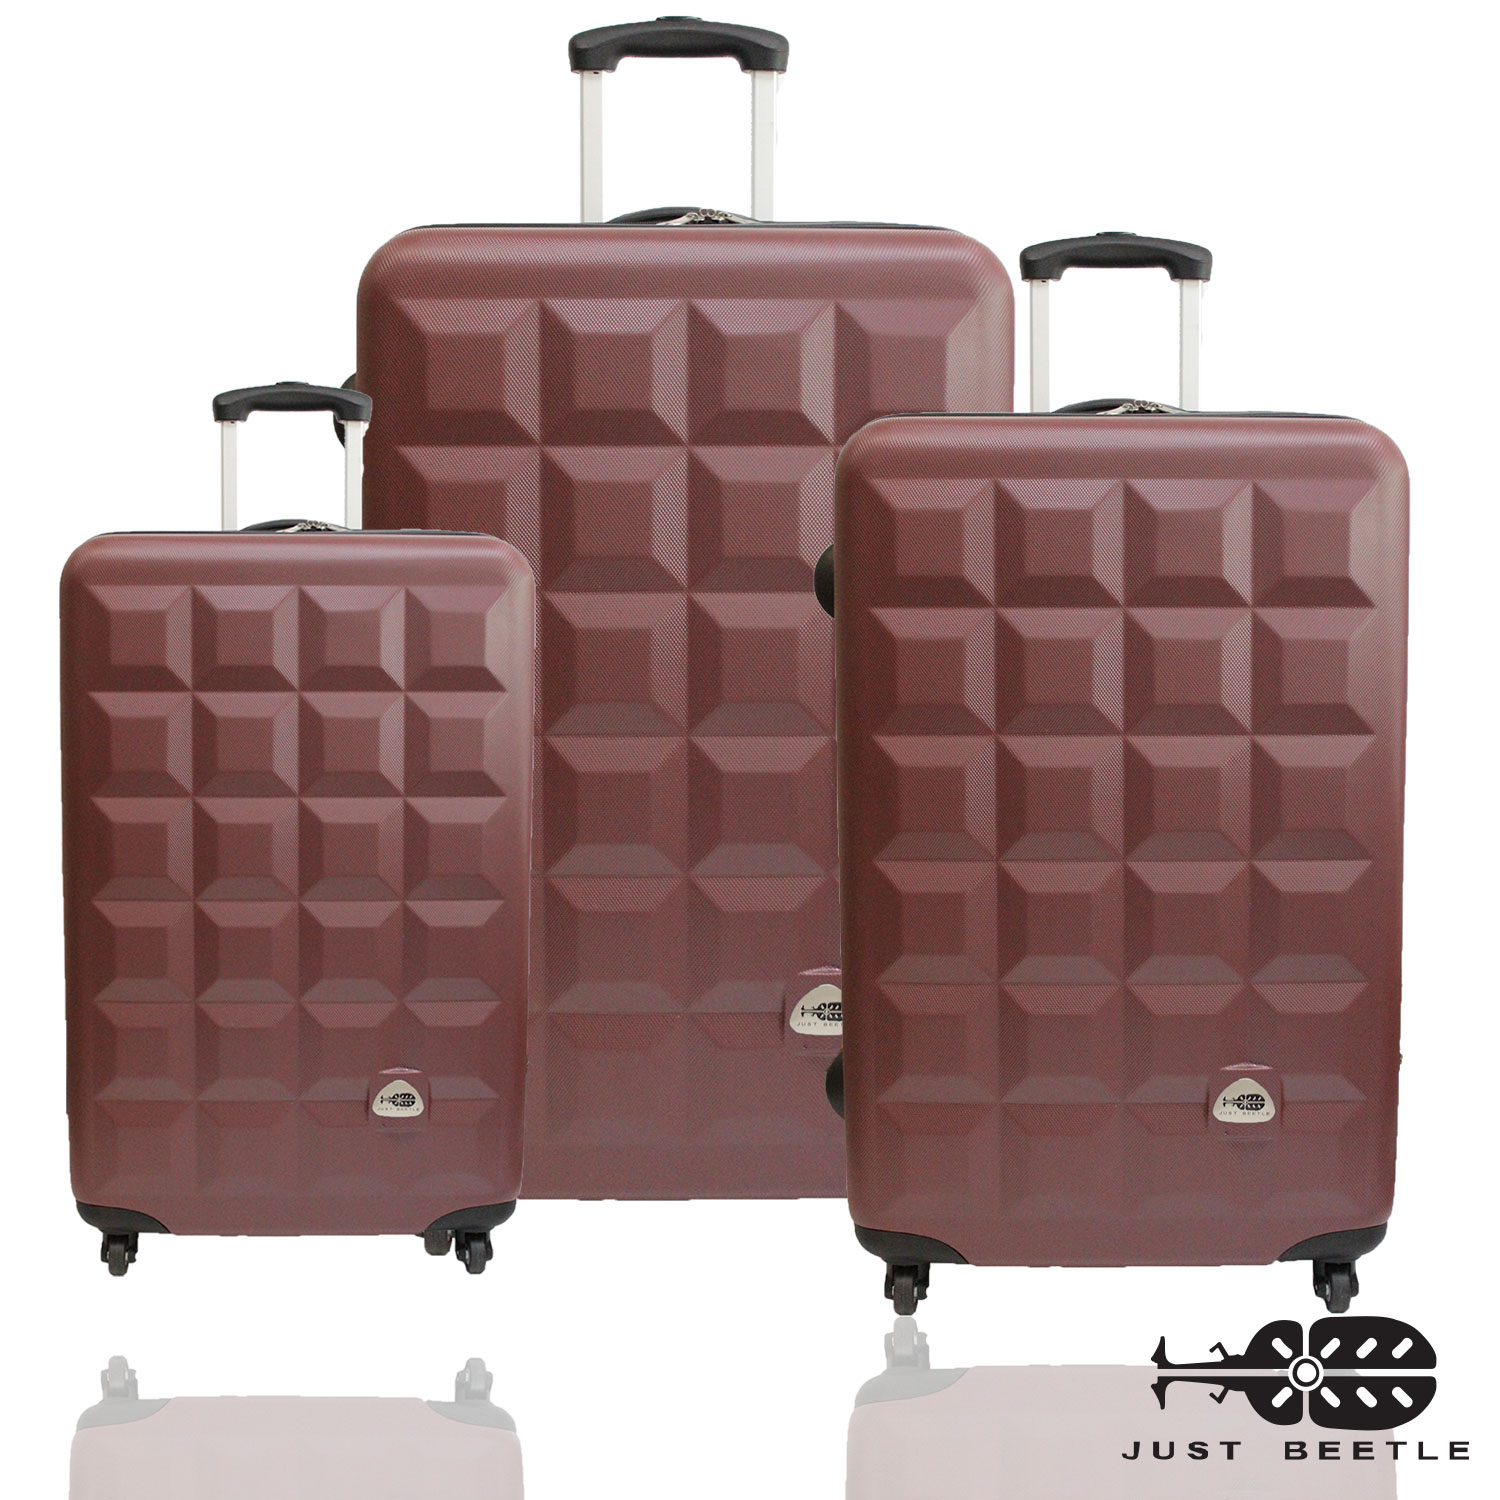 Just Beetle 趣味巧克力系列ABS輕硬殼3件組旅行箱/行李箱 0